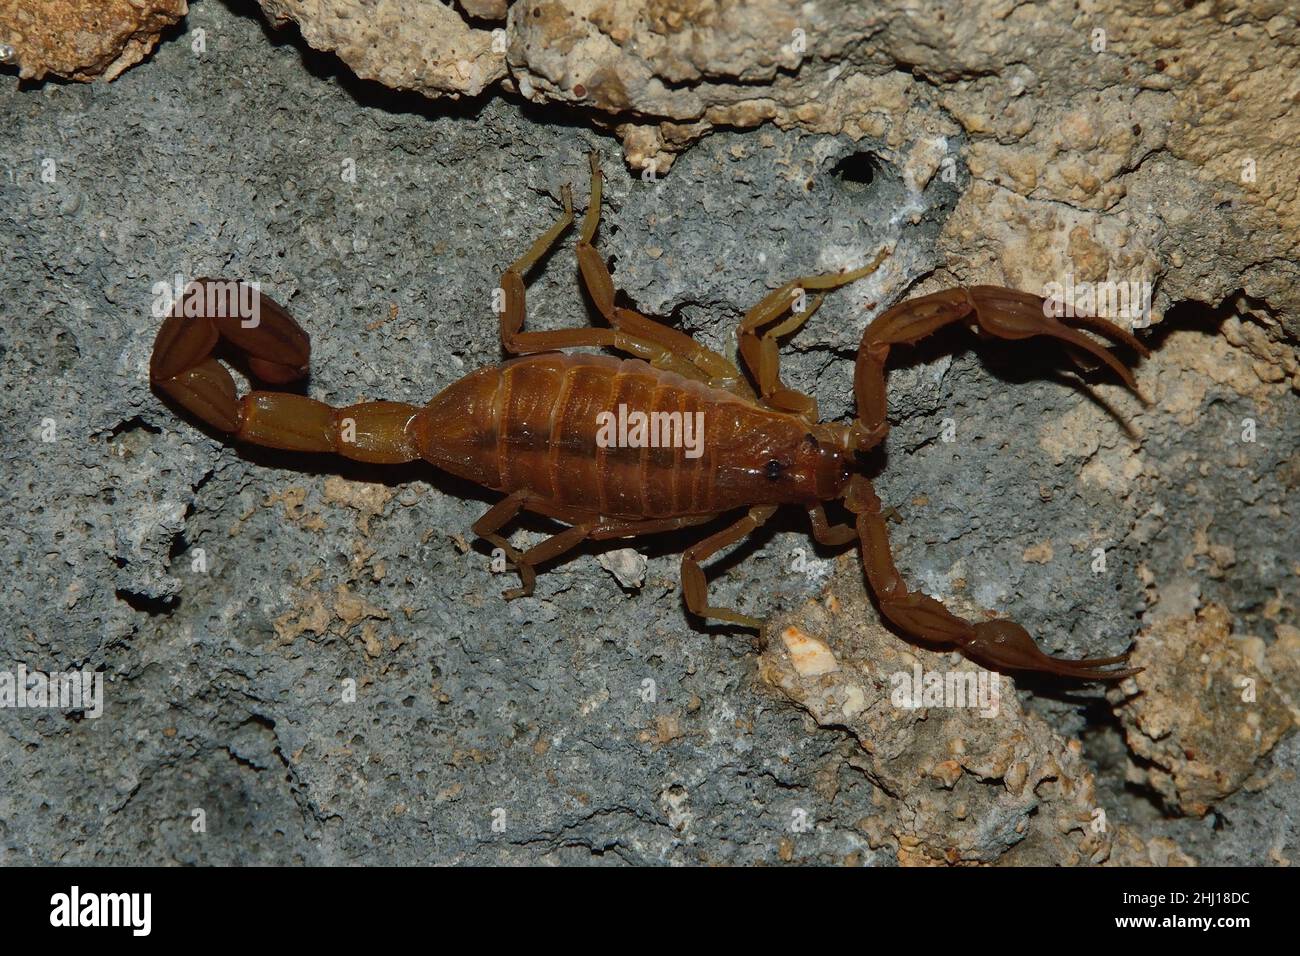 Antillen-Rindenskorpion, antillan bark scorpion, Centruroides testaceus, Curacao Stock Photo